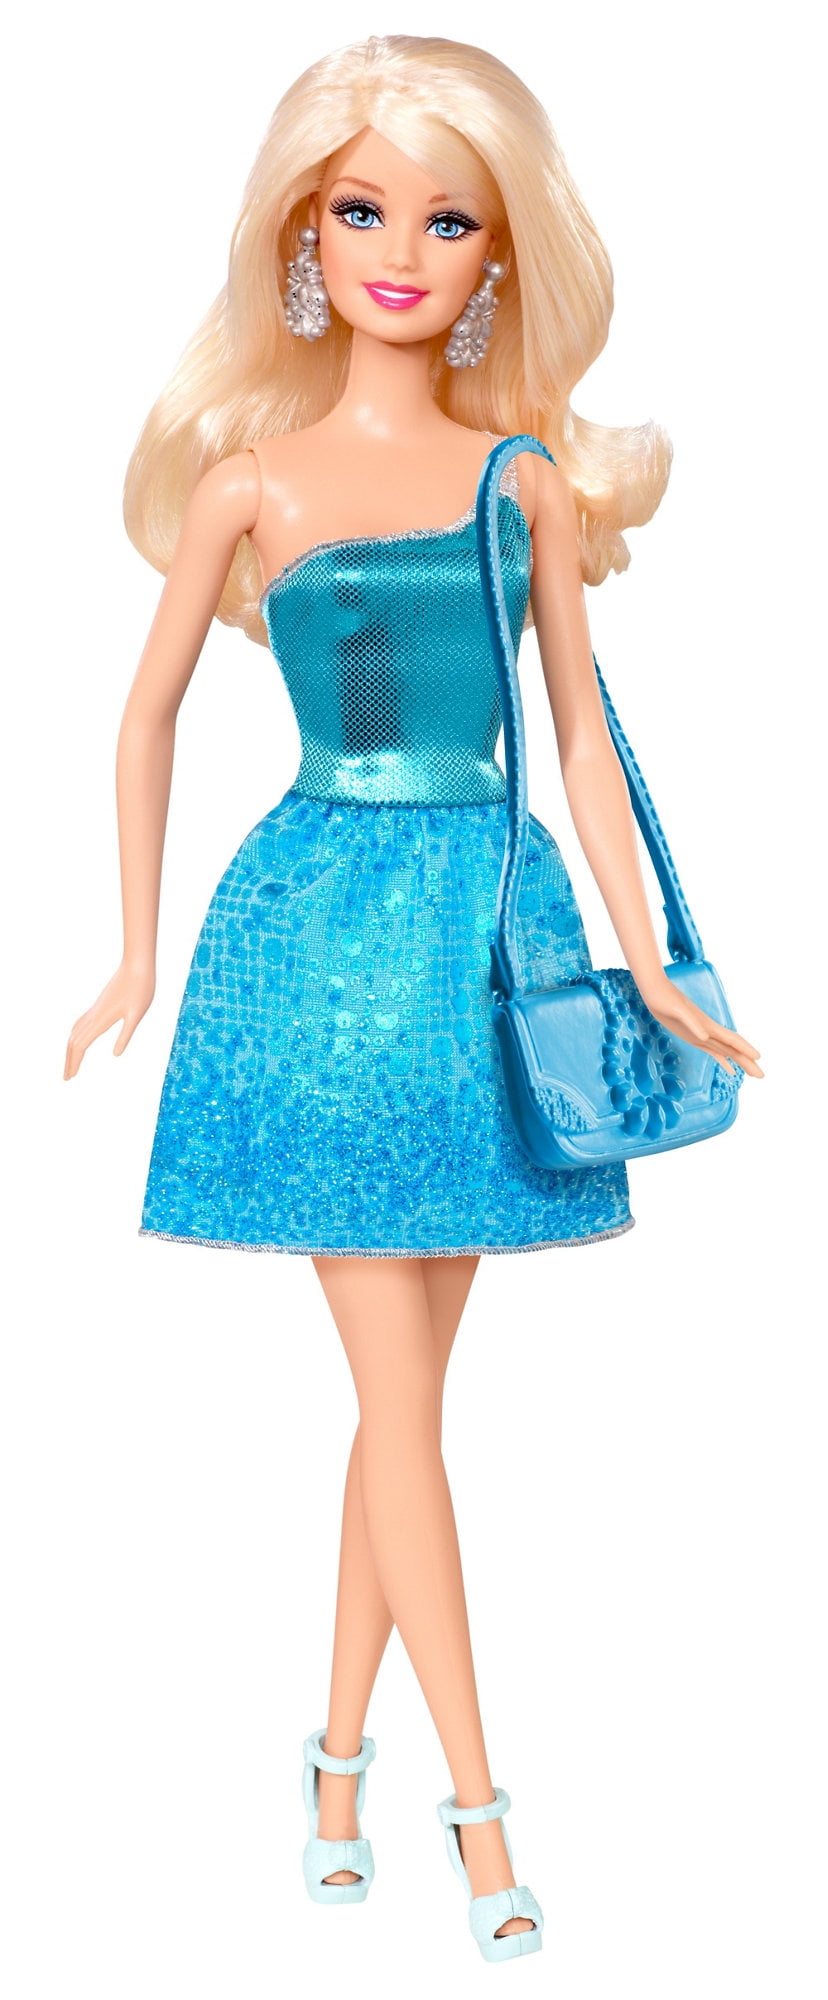 Steff The Barbie Doll » Otaewns